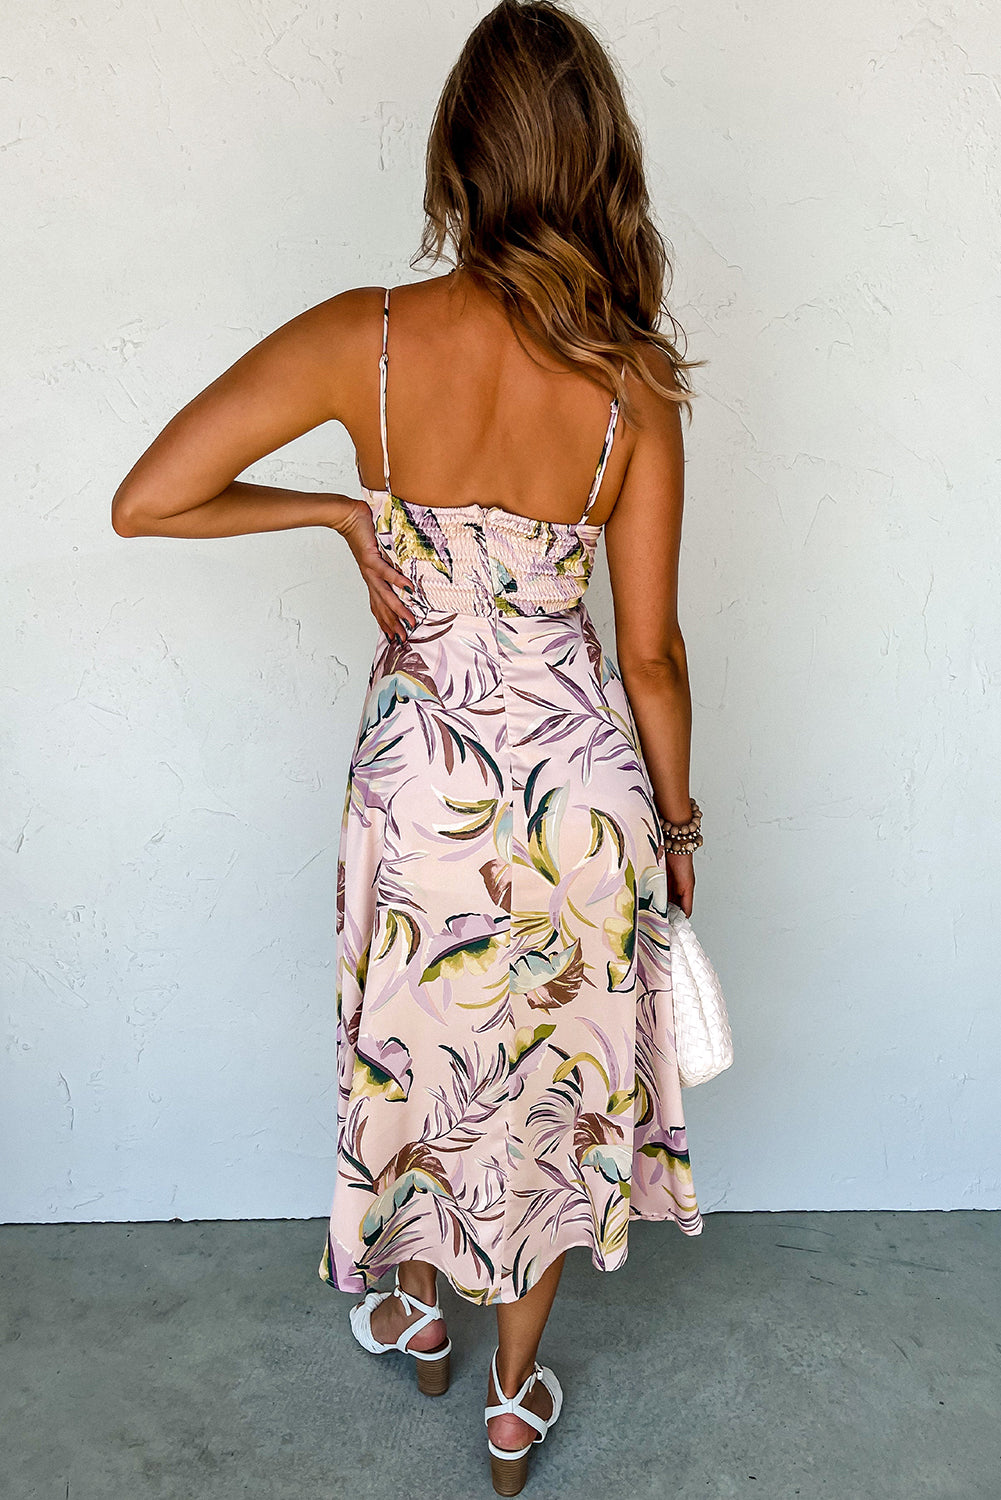 Tropical Print Floral Dress| Summer Midi Dress